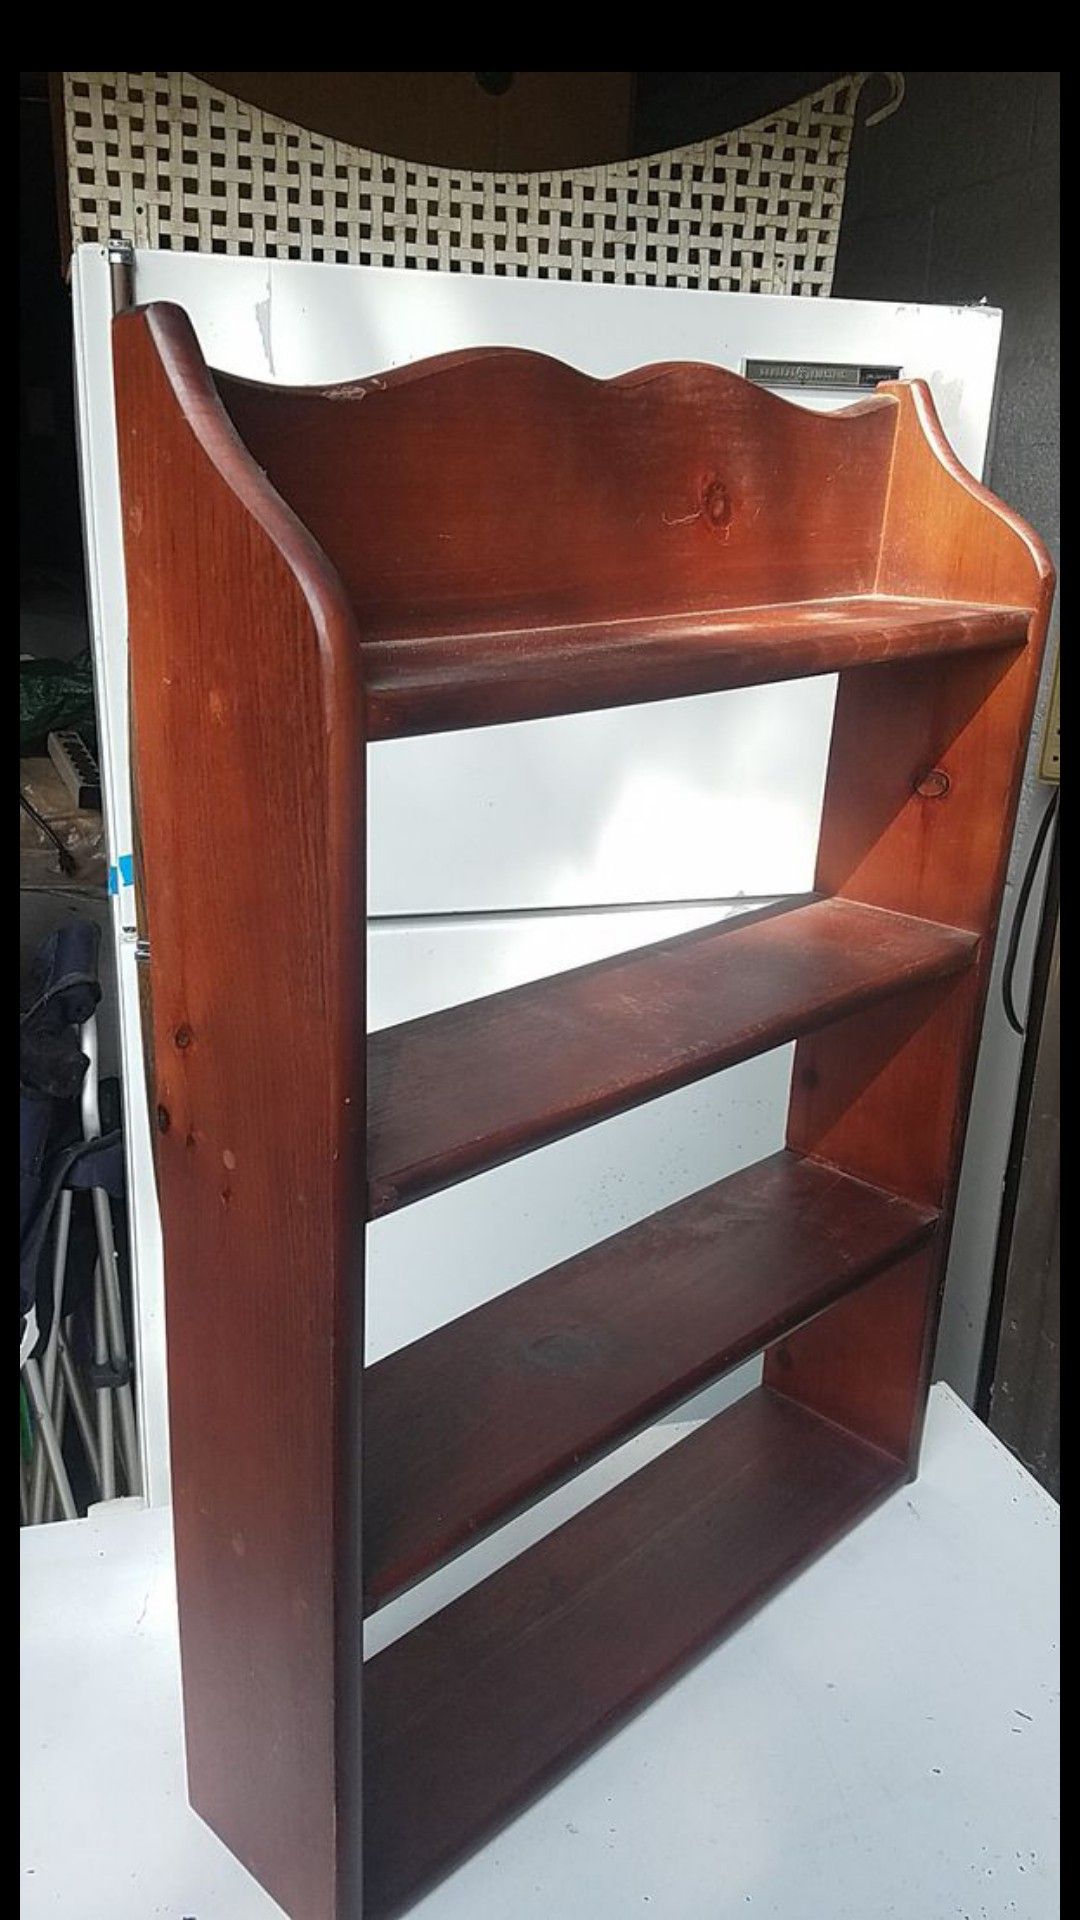 Small wooden Shelf